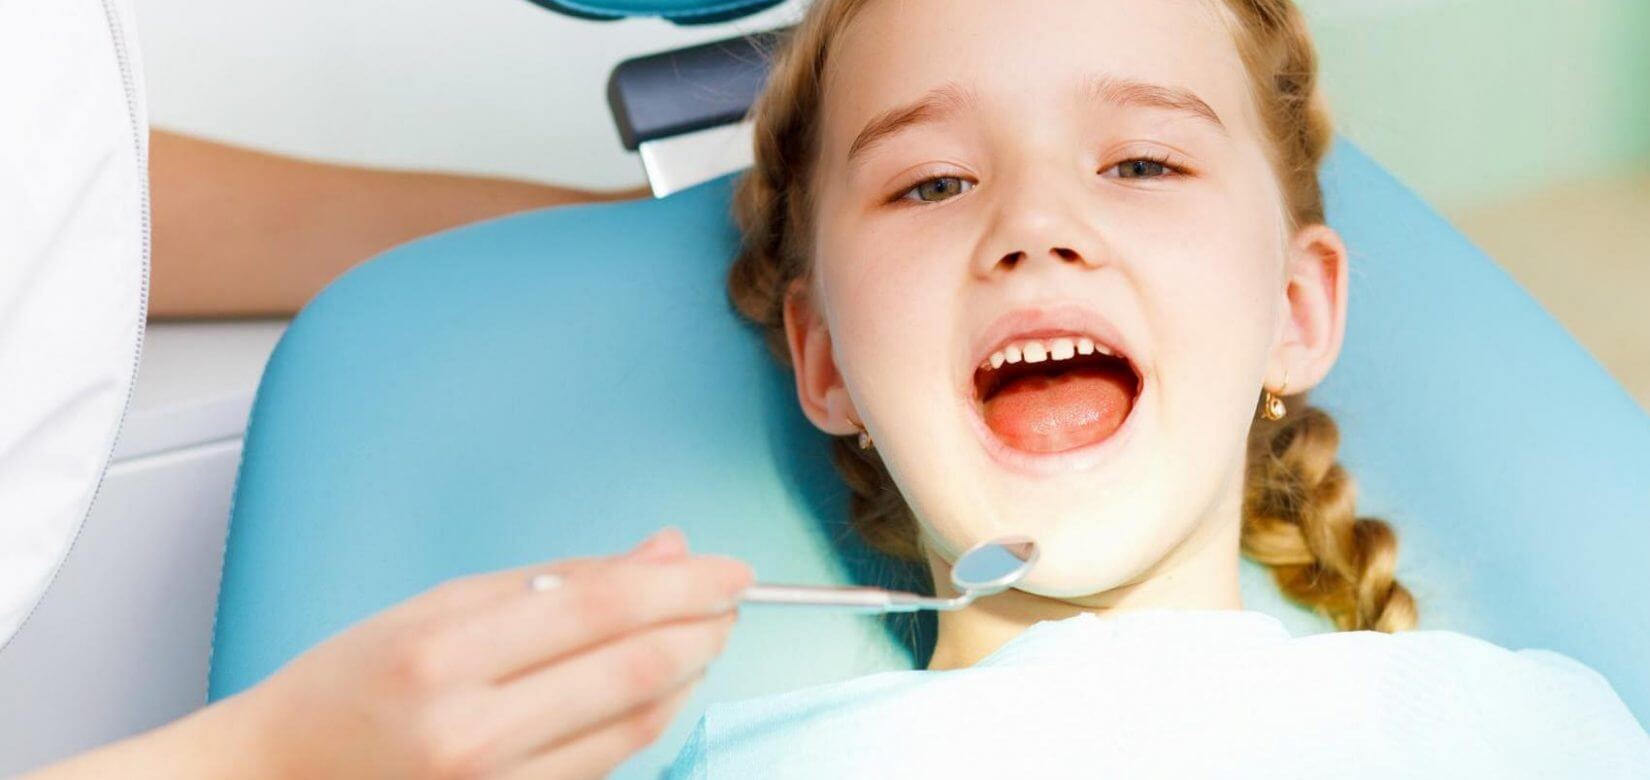 Dentist Pass: Δωρεάν οδοντιατρικός έλεγχος για παιδιά - Πώς θα λάβουν τα voucher οι γονείς